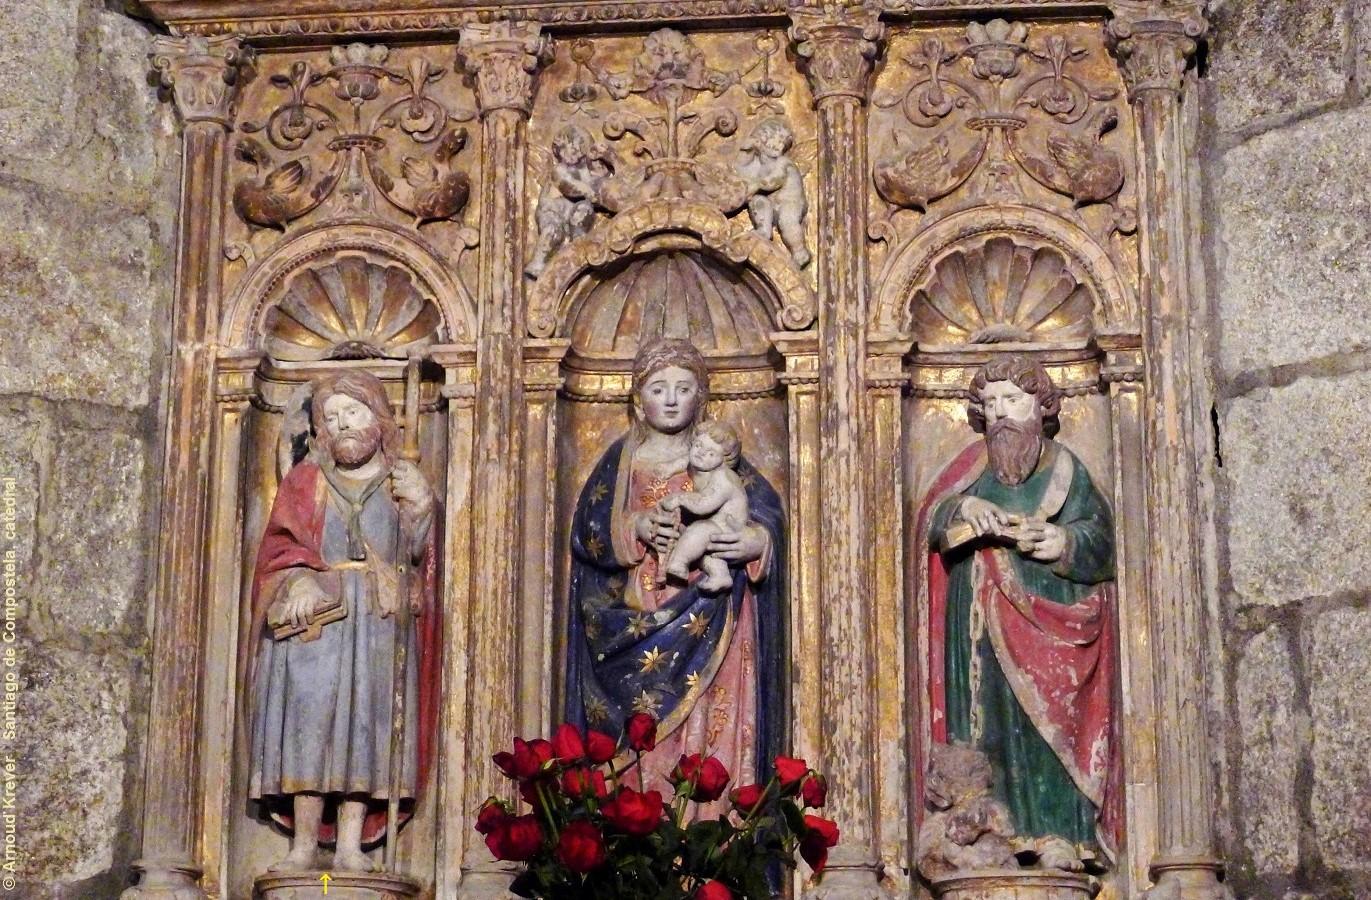 Santiago peregrino - Santiago catedral - Santiago catedral